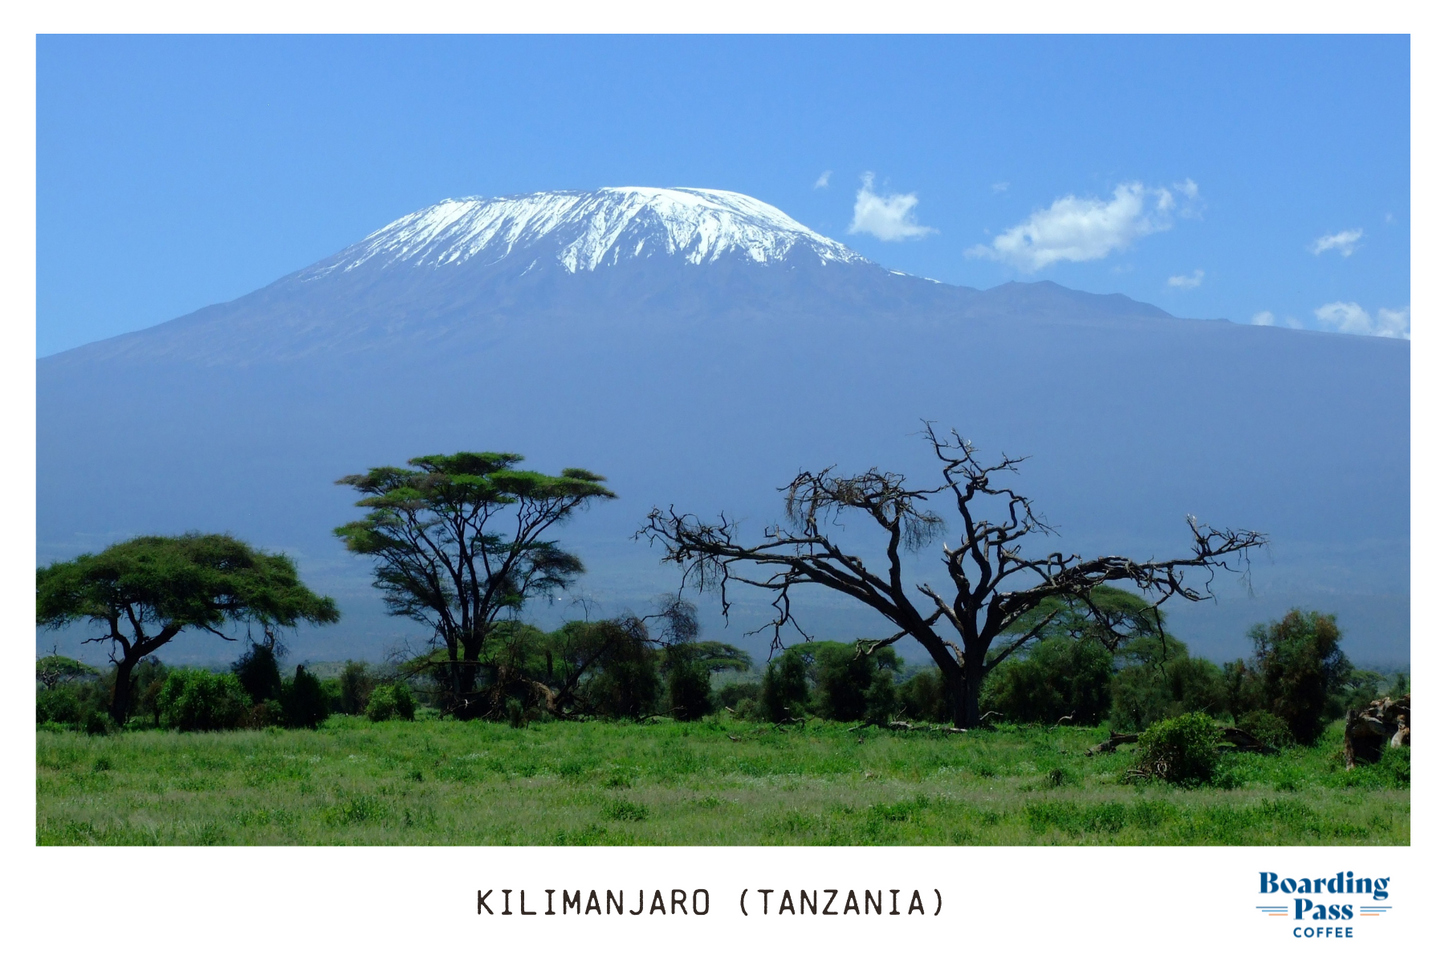 Kilimanjaro (Tanzania) - Dark Roast